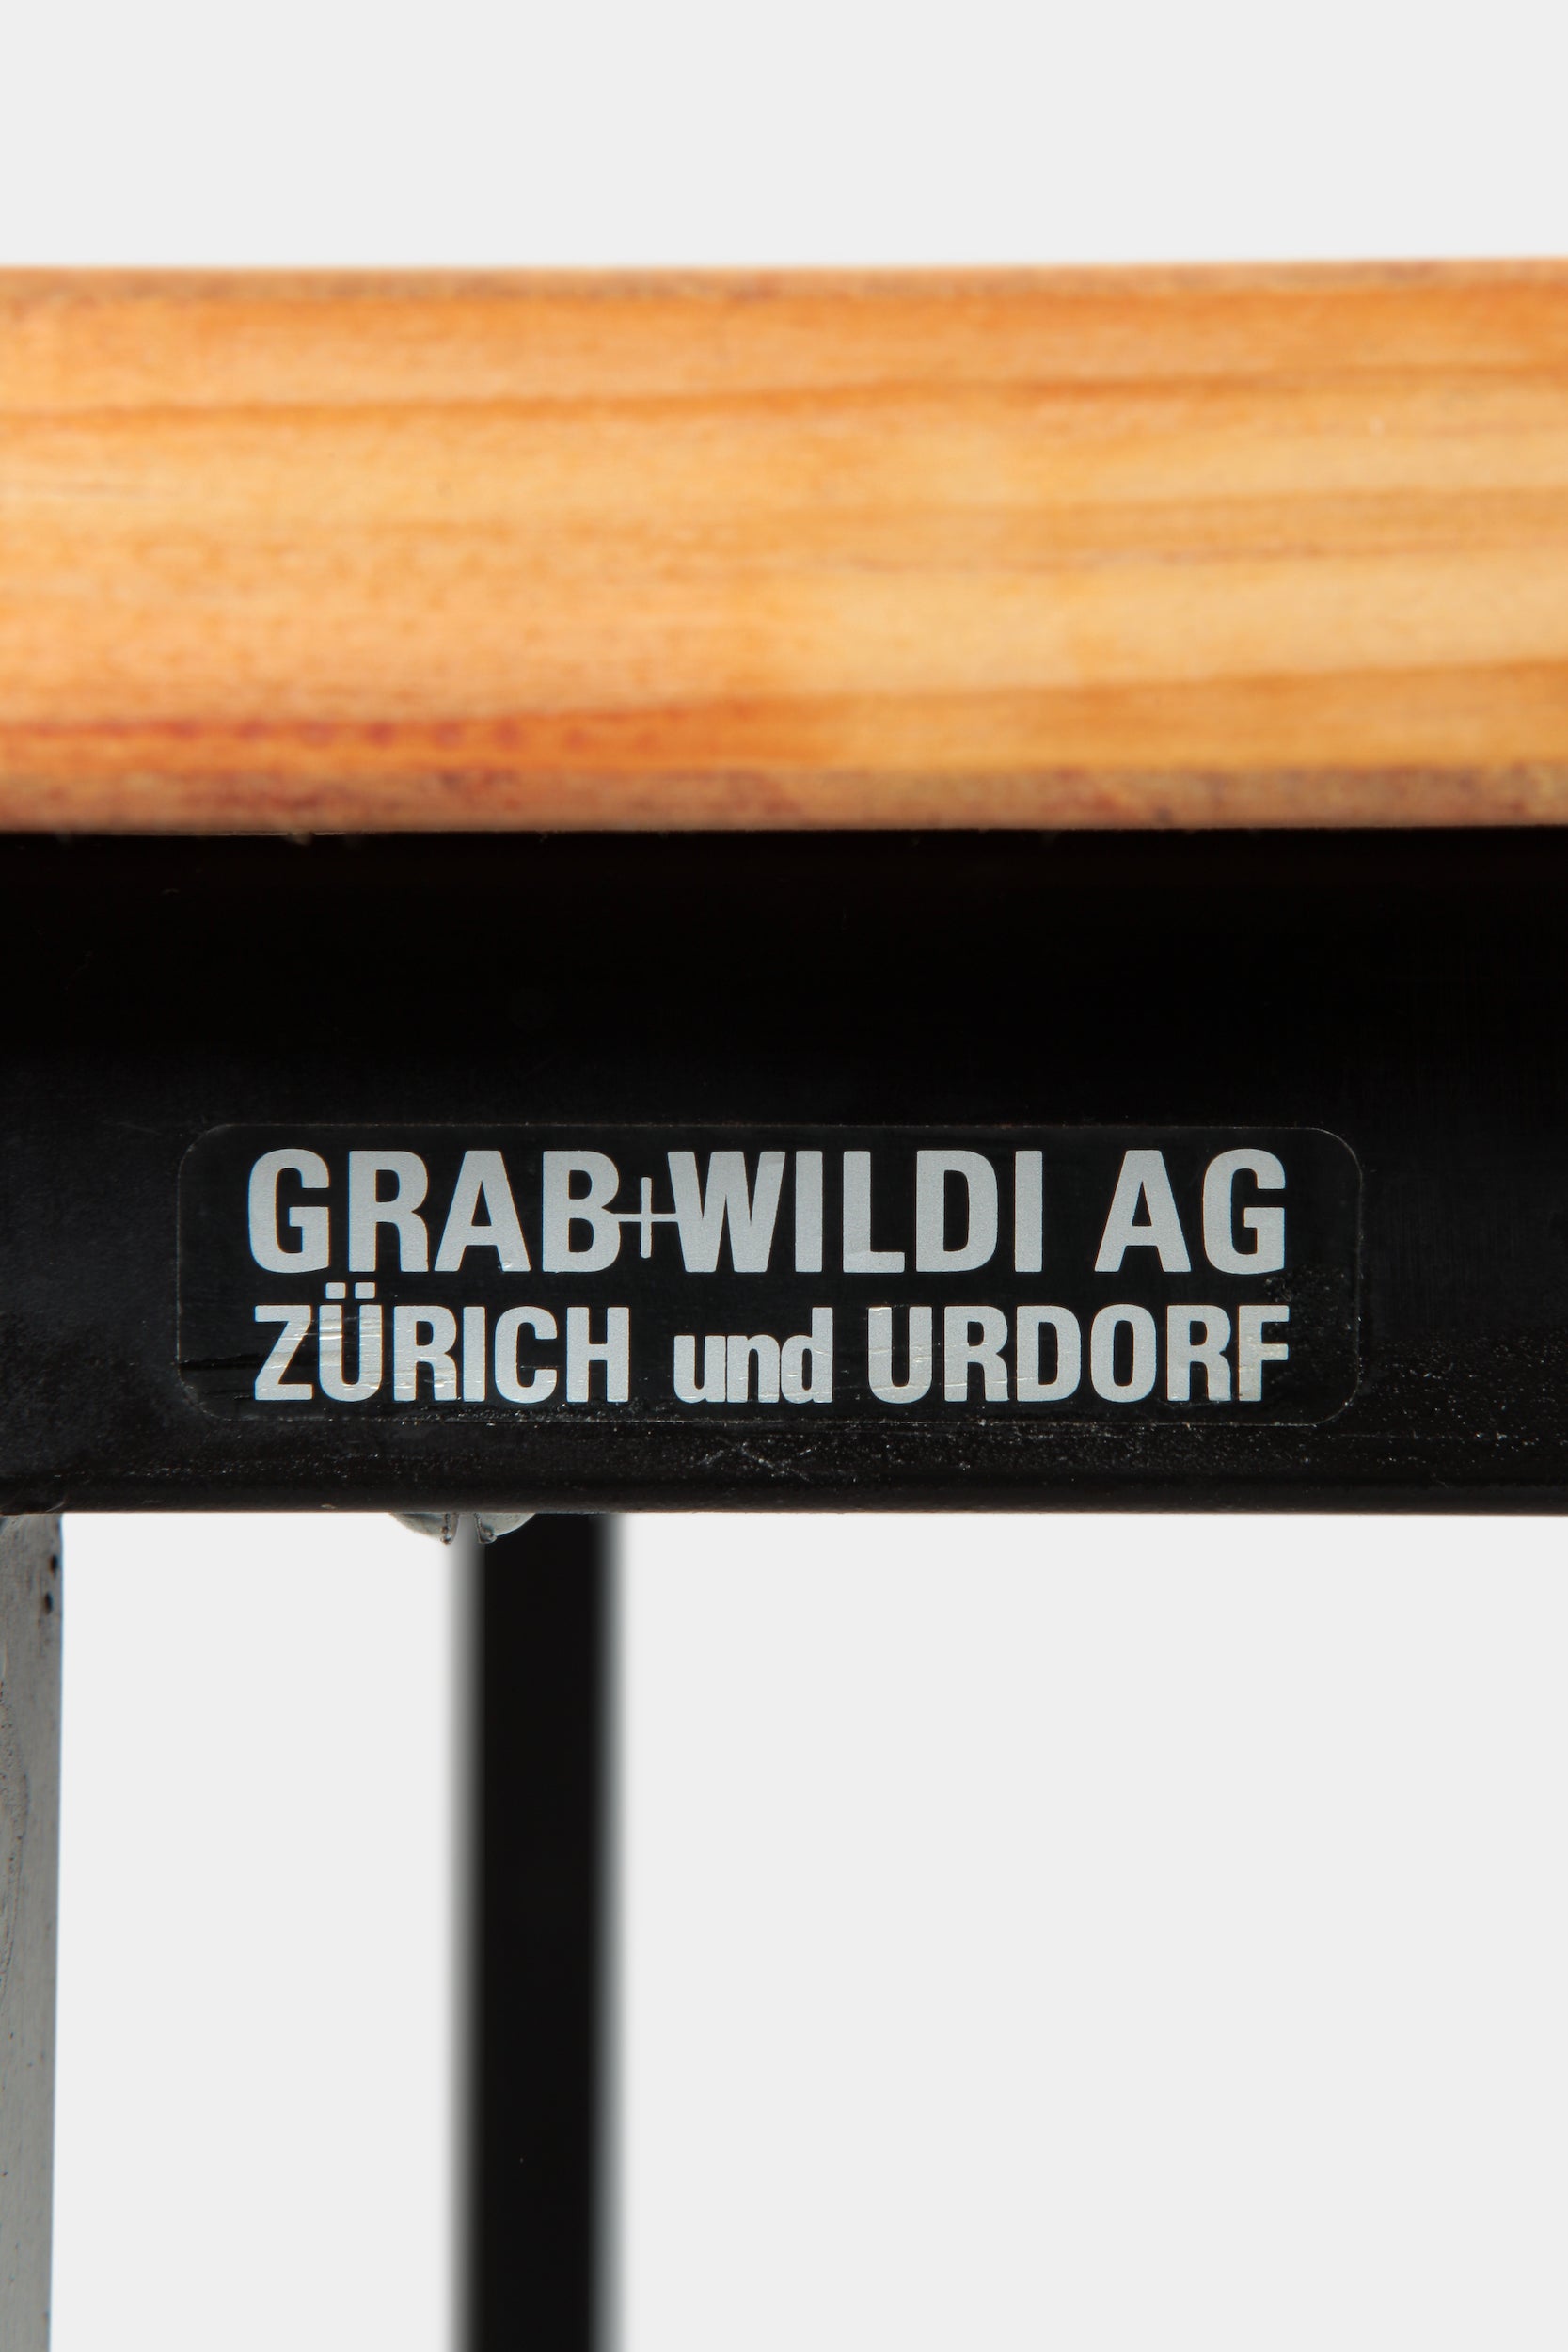 Grab + Wildi AG table 70s